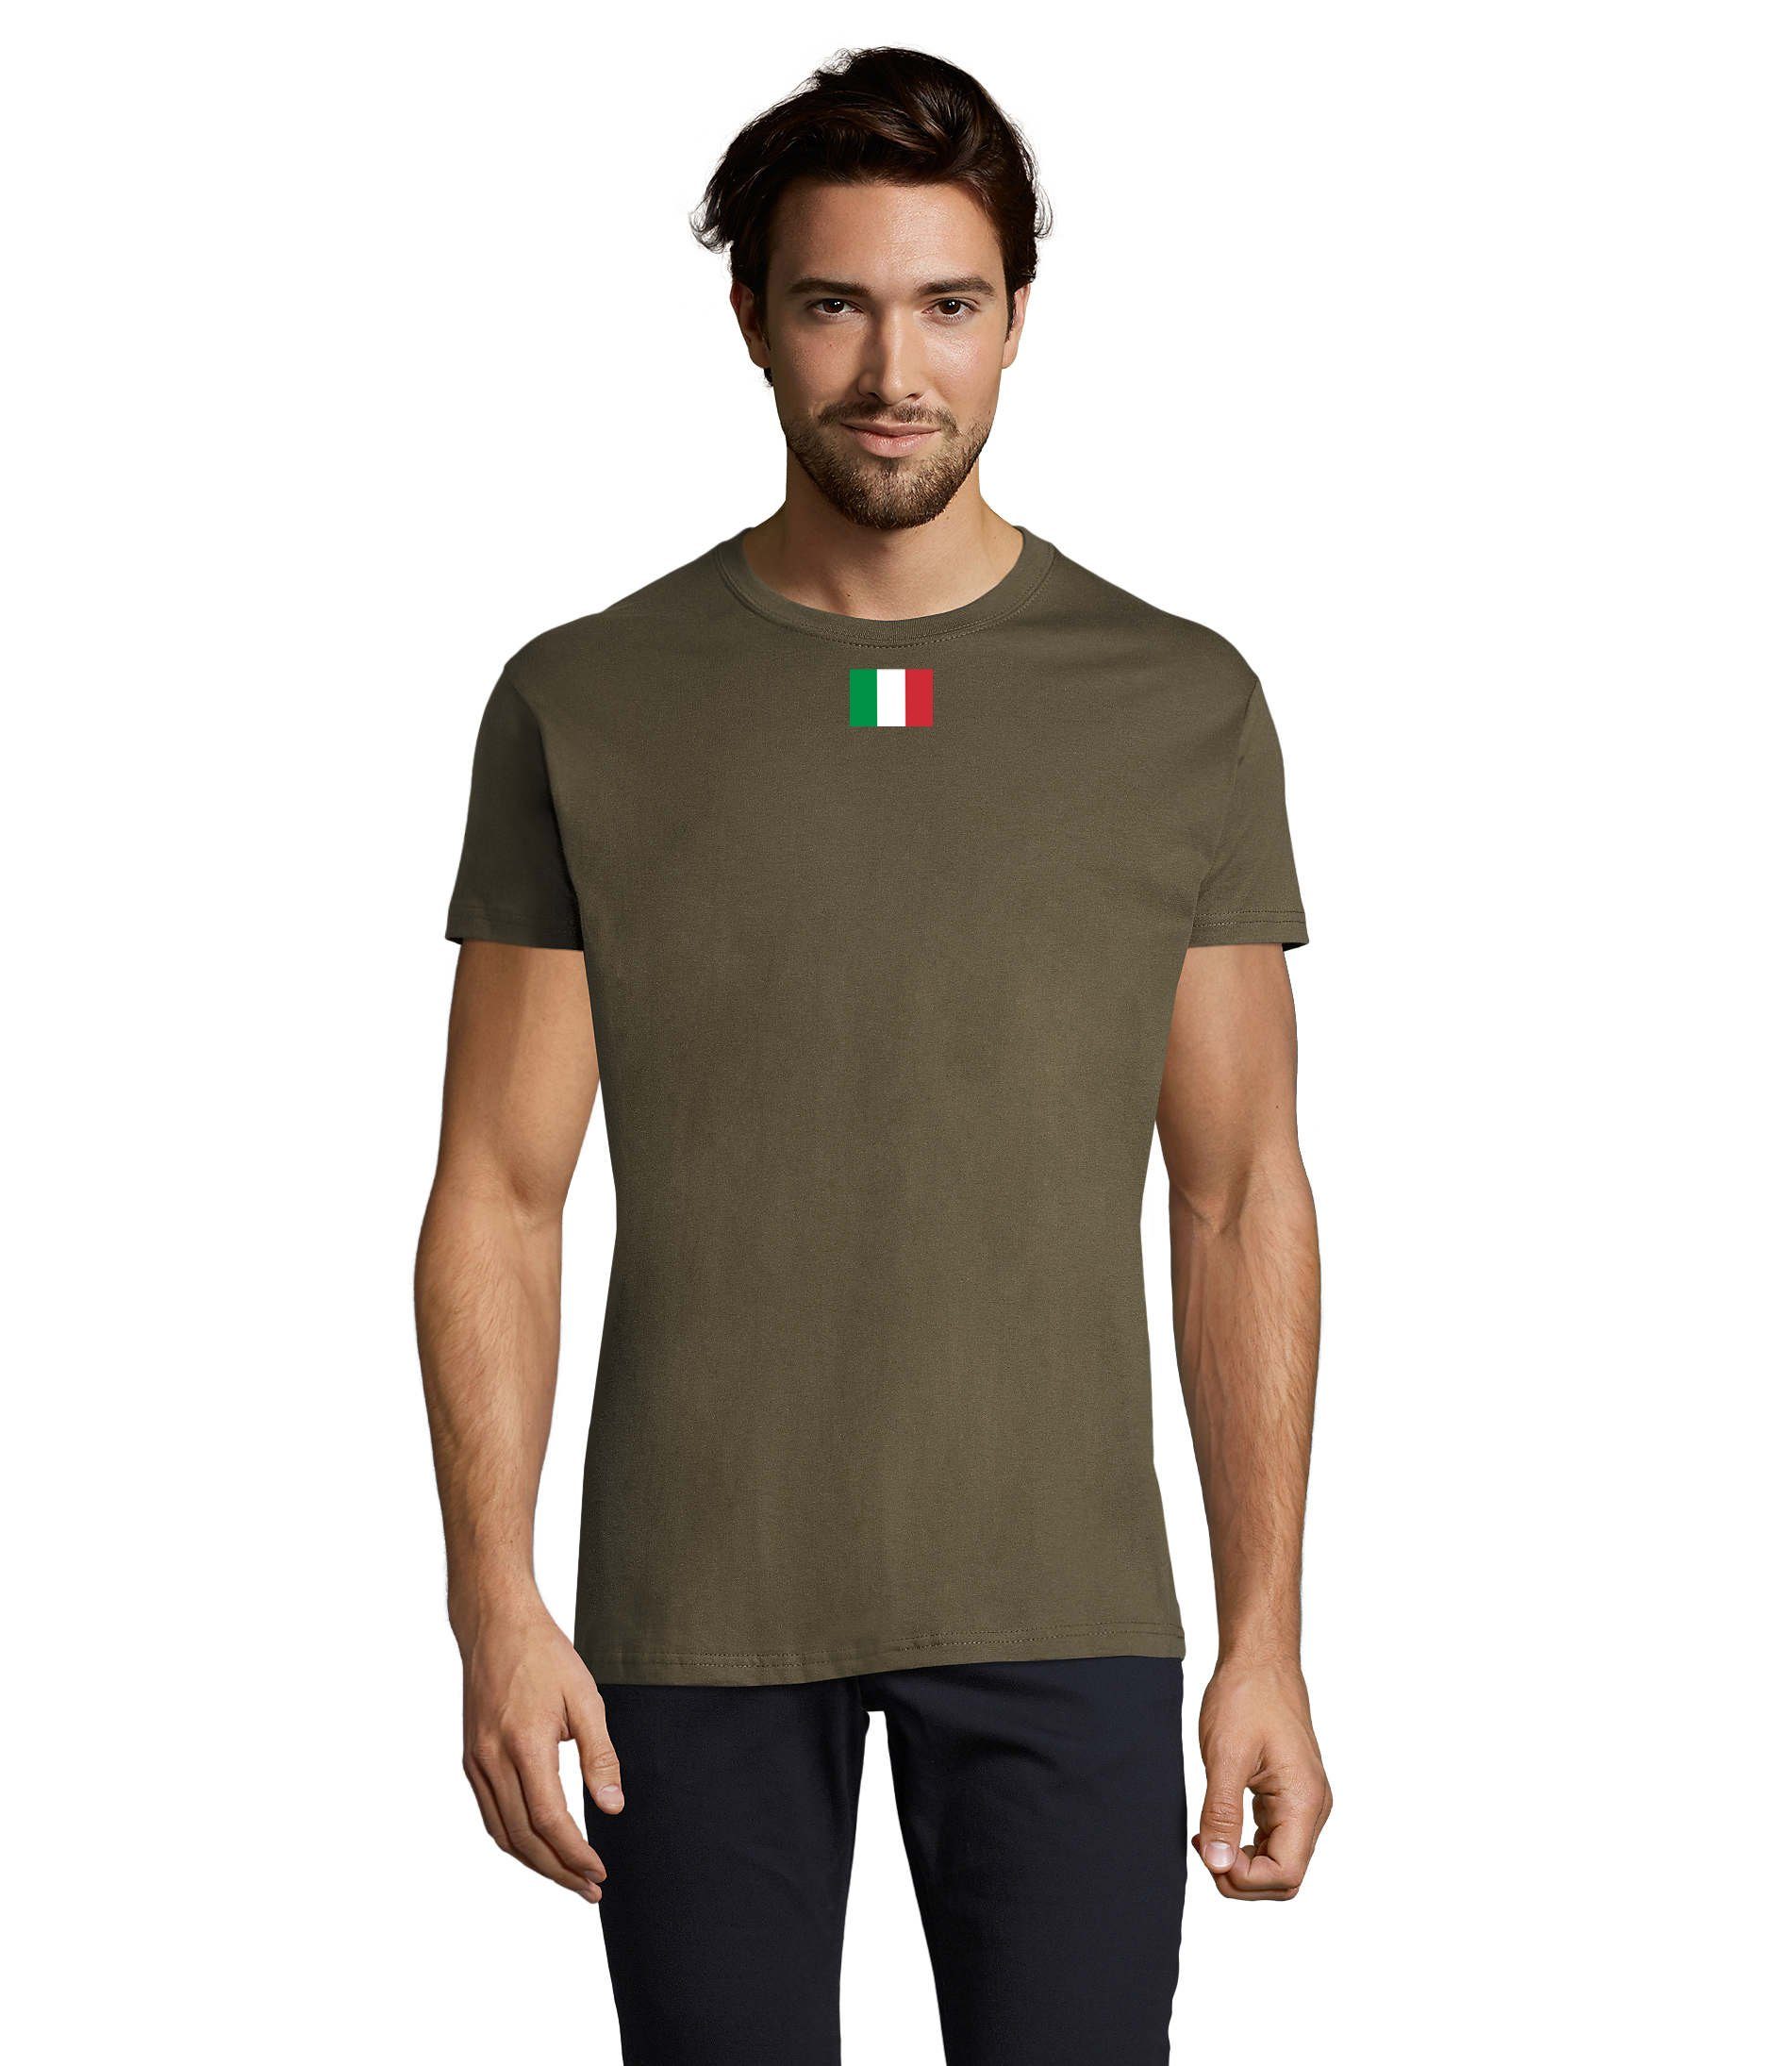 Blondie & Brownie T-Shirt Herren USA Ukraine Italien Nato Force Peace Army Air Armee